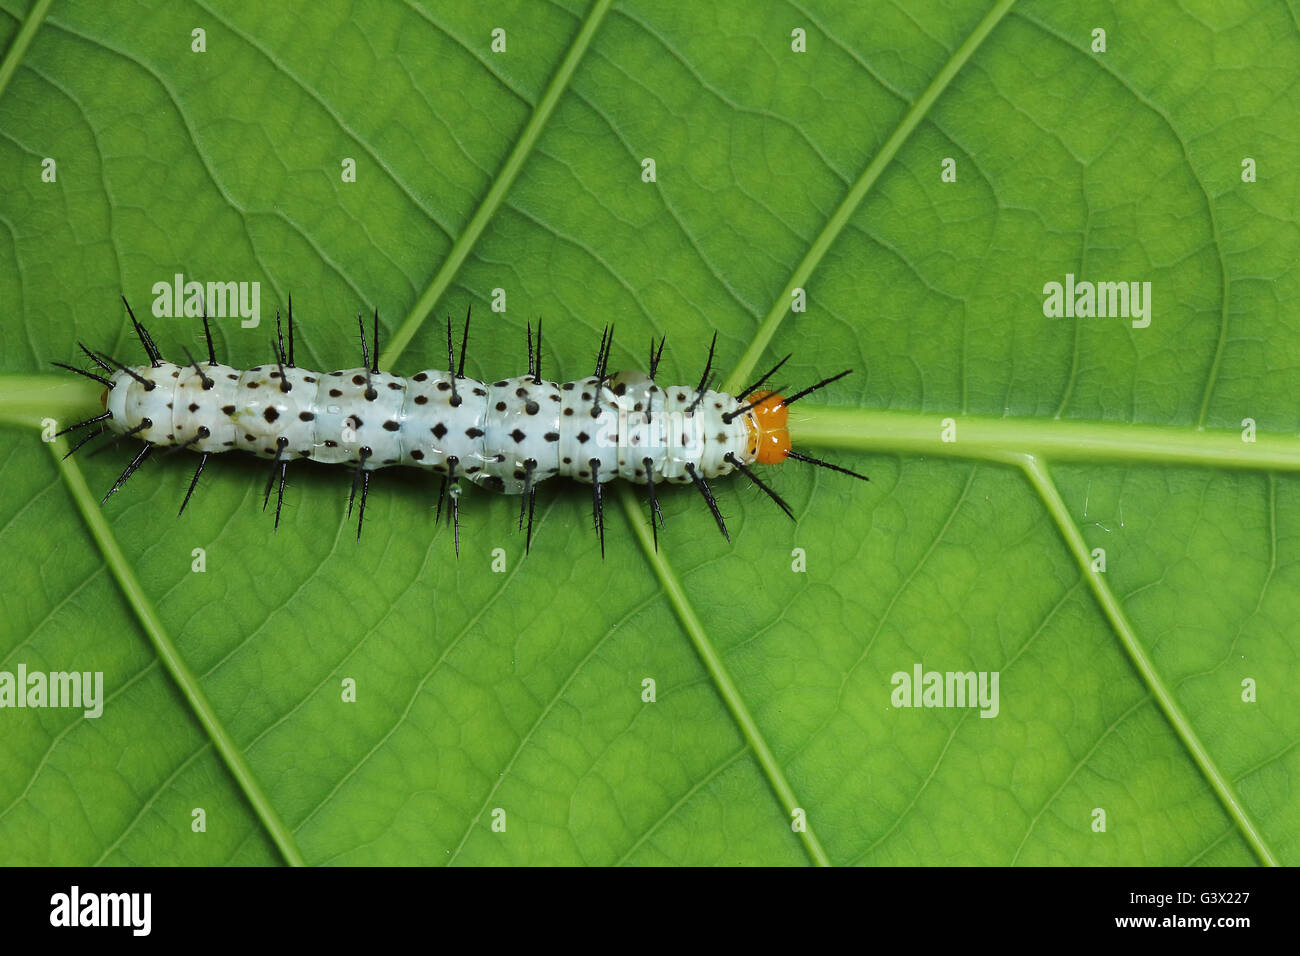 Caterpillar of Heliconius sp. Lepidoptera: Nymphalidae Stock Photo